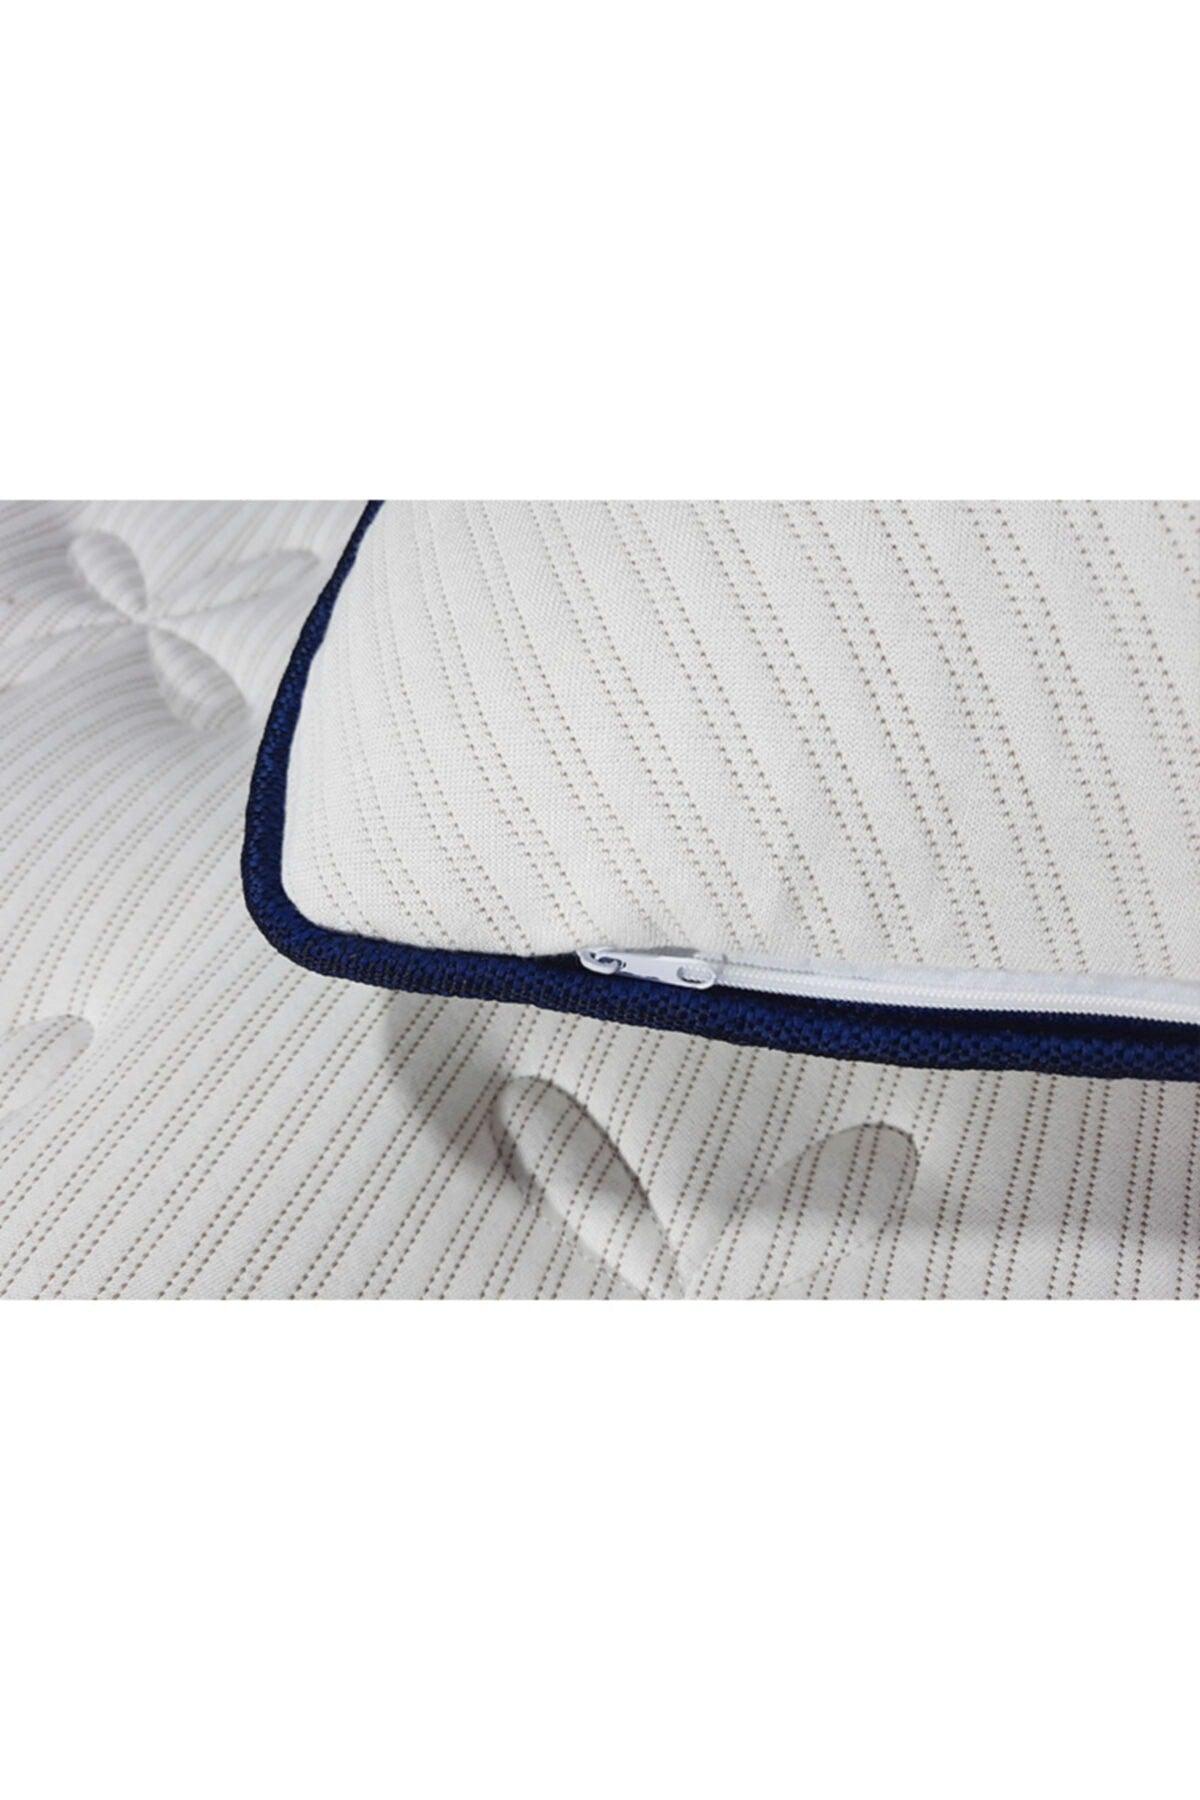 Orthopedic Visco Pillow Luxury Orthopedic Pillow For Neck Hernia (Aloe Vera Fabric) - Swordslife